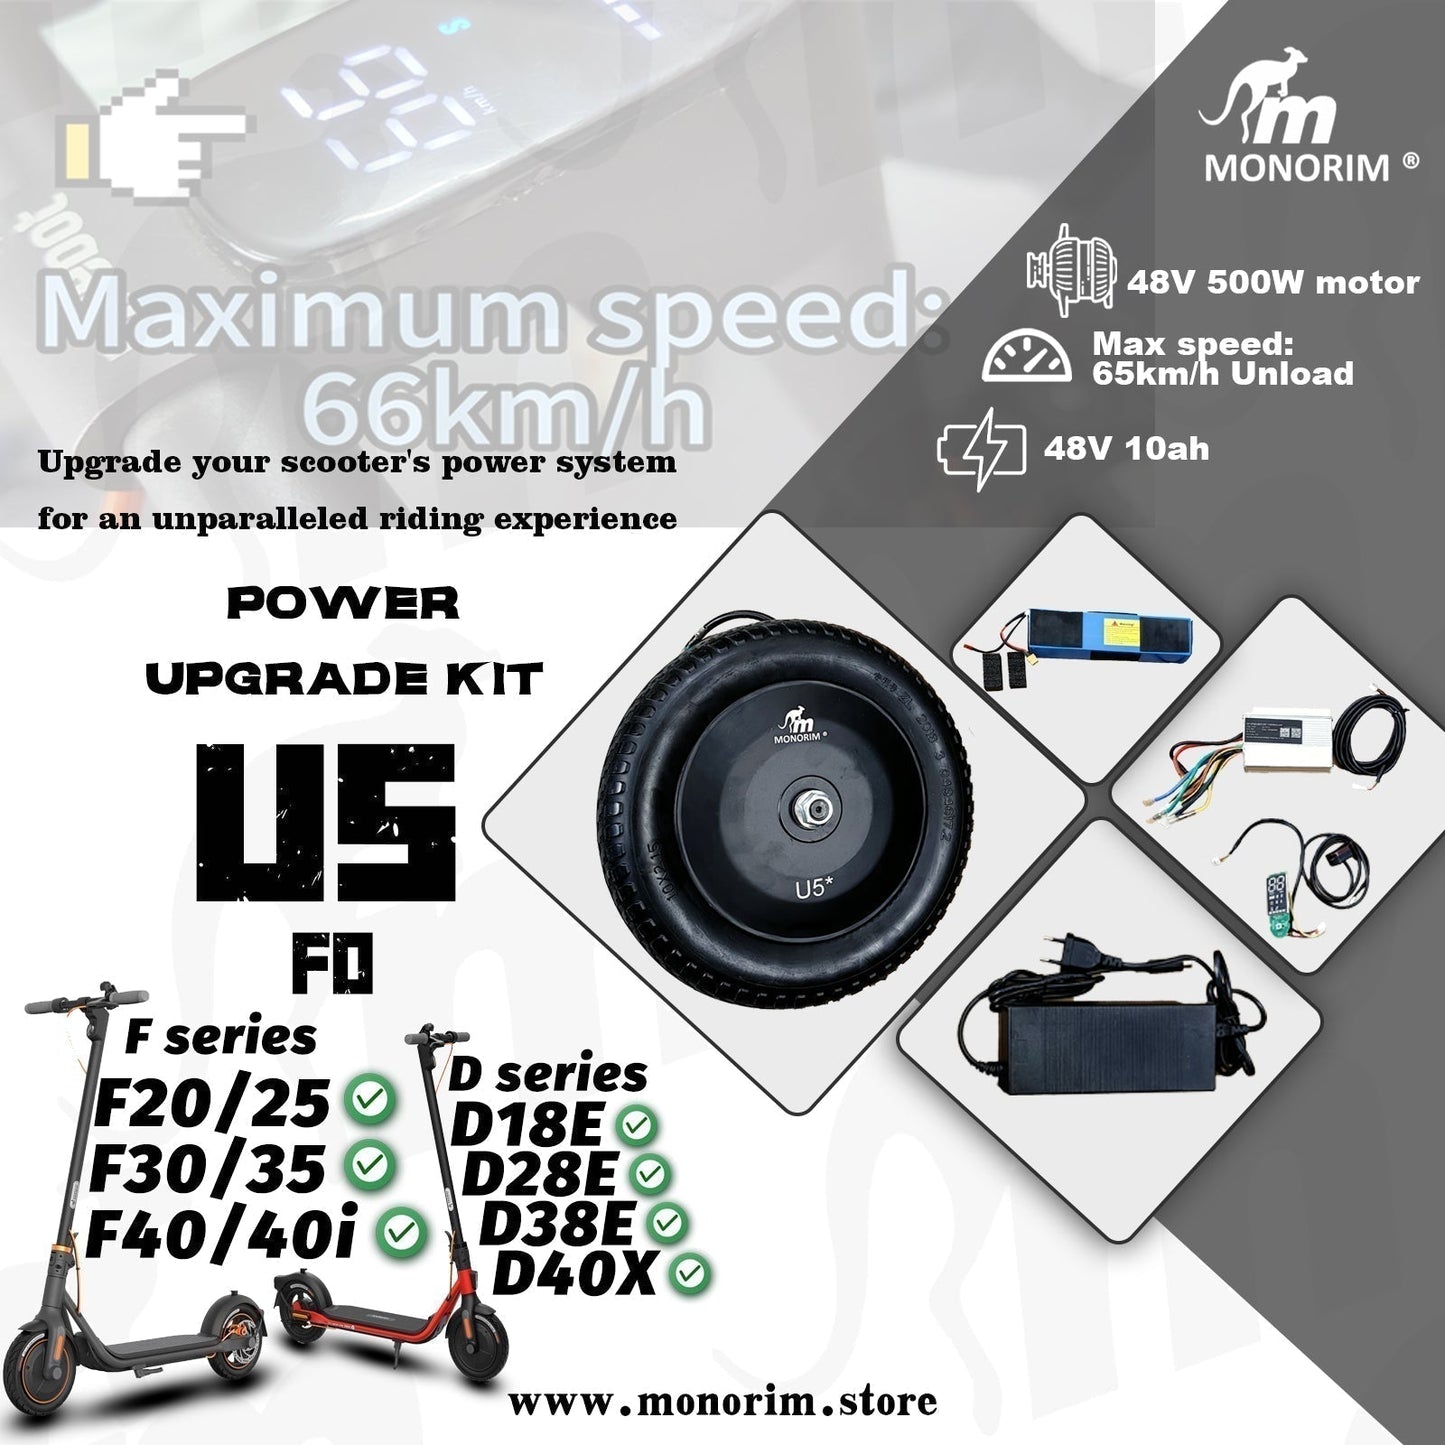 Monorim U5-F0 Upgrade Kit to be 500w 48v 10.4ah for segway D38E Speed 65km/h